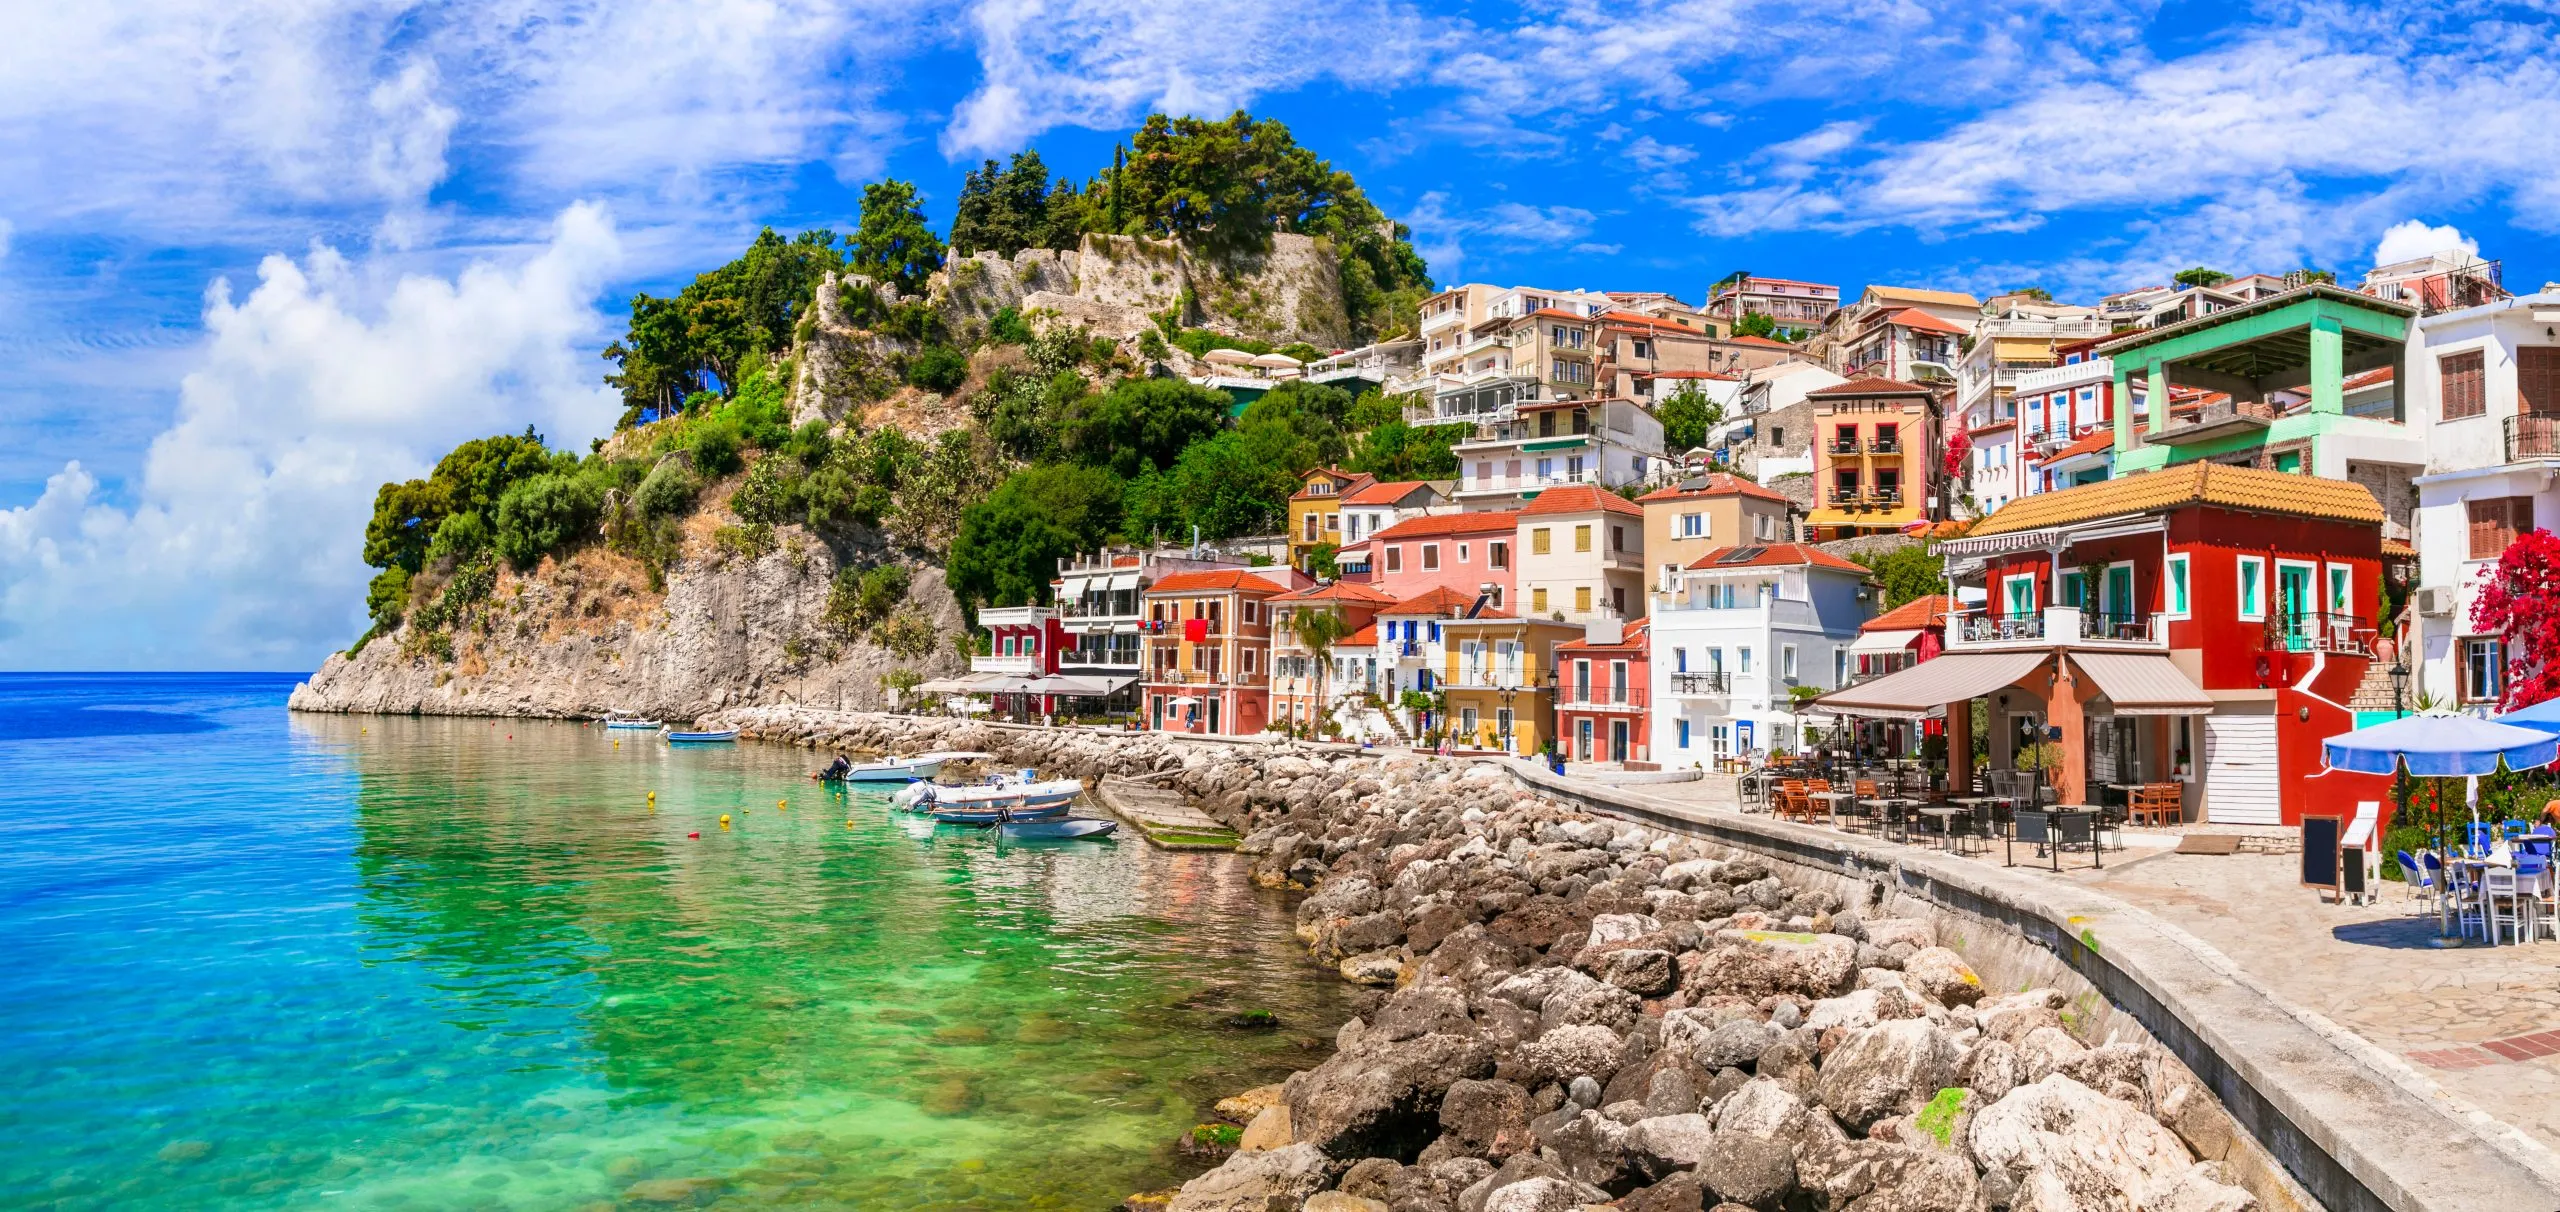 Coloful όμορφη πόλη Πάργα - τέλεια απόδραση στις ακτές του Ιονίου της Ελλάδας, δημοφιλές τουριστικό αξιοθέατο και καλοκαιρινές διακοπές στην Ήπειρο